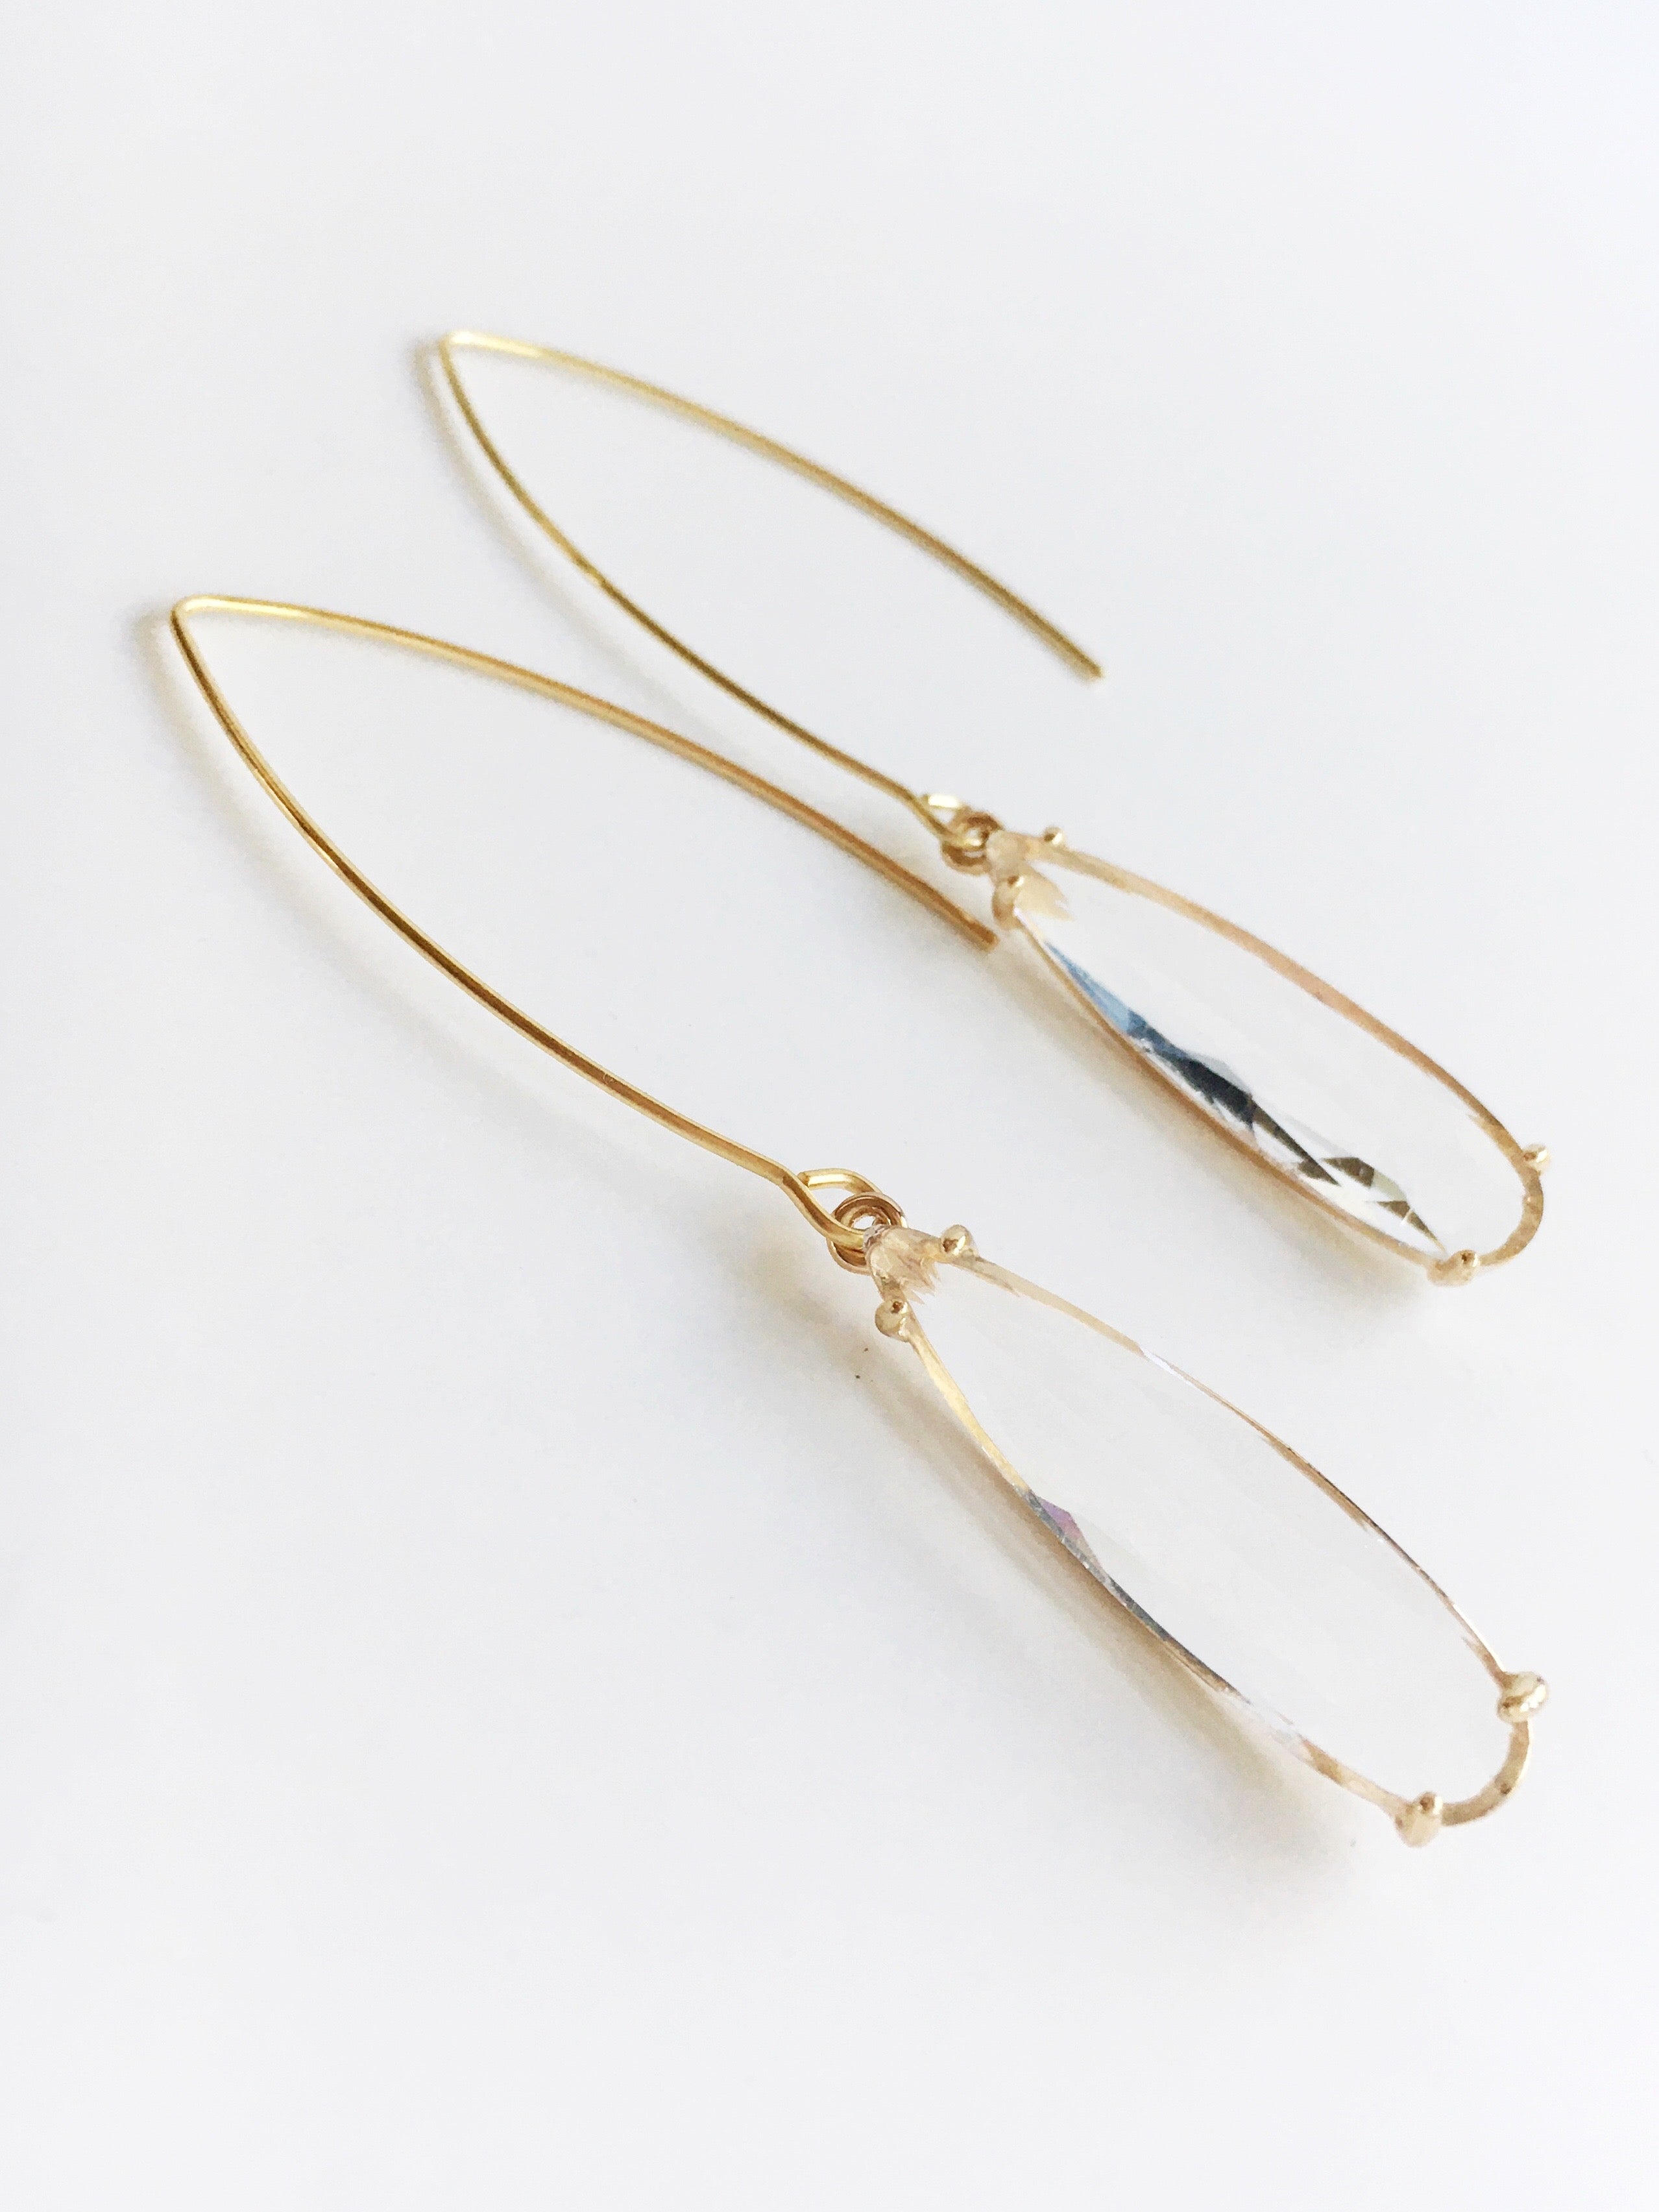 Crystal clear Glass Teardrop and Gold Long Dangle Earrings